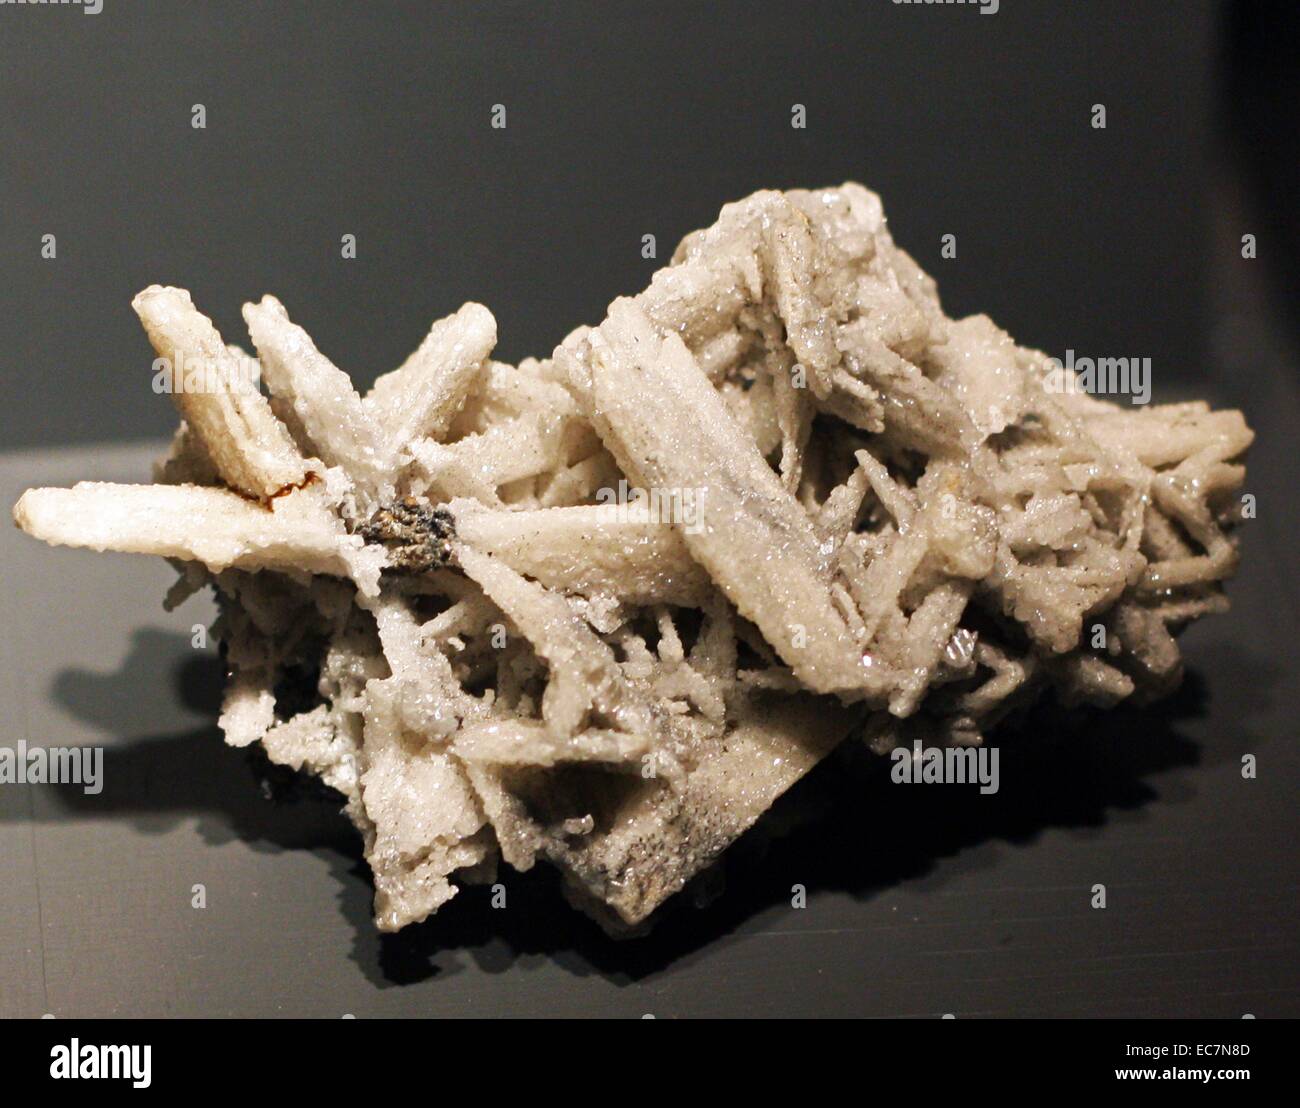 Anglesite, Broken Hill, Australia es un mineral de sulfato de plomo. Se presenta como un producto de oxidación del mineral de sulfuro de plomo primario, galena. Foto de stock